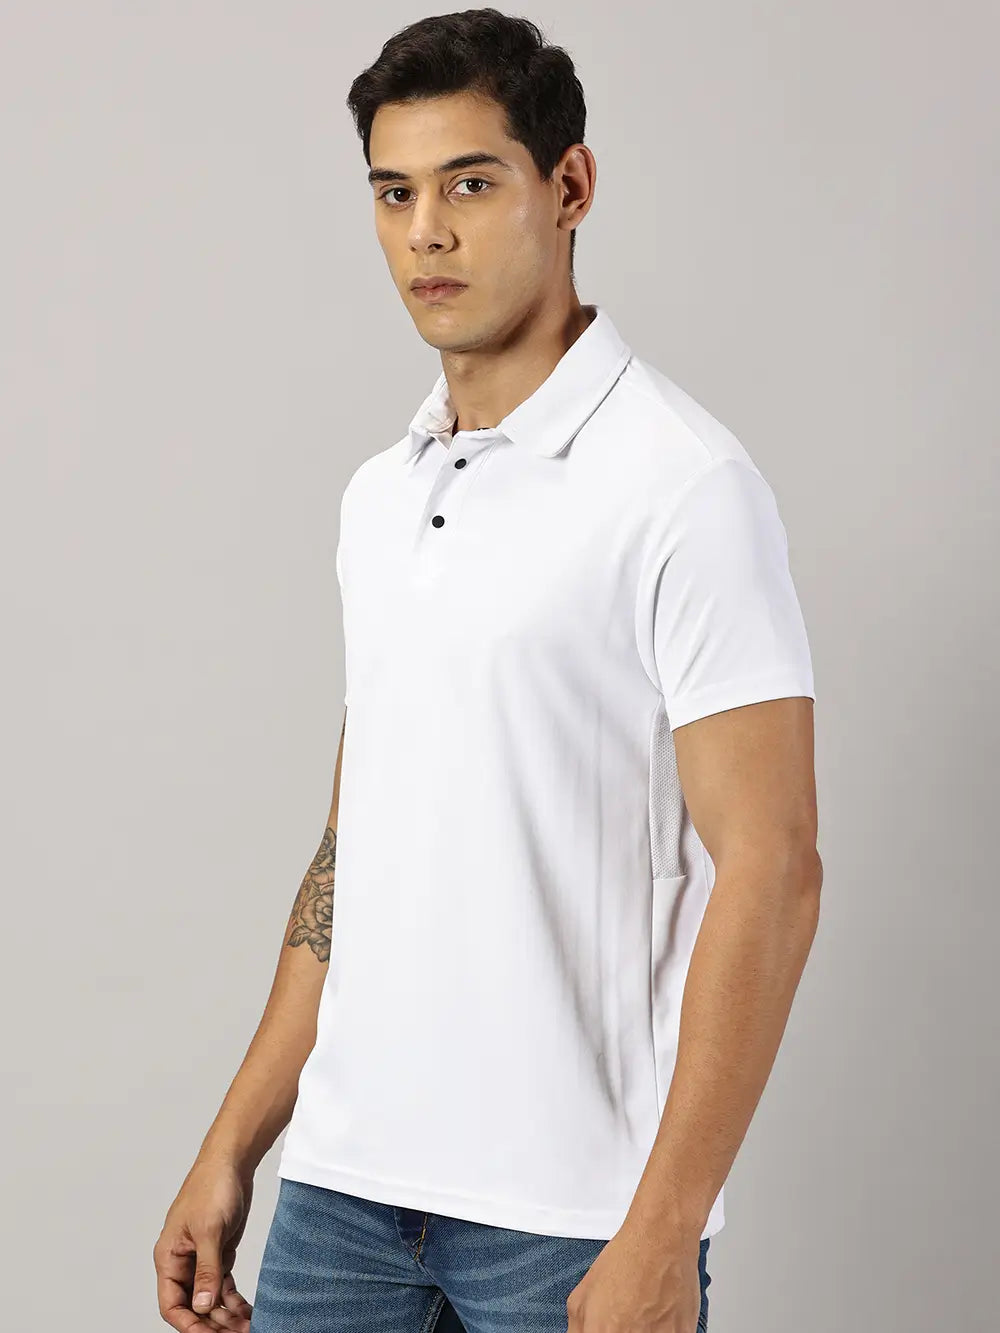 A model wearing Blue Tyga odor-free white polo t-shirt